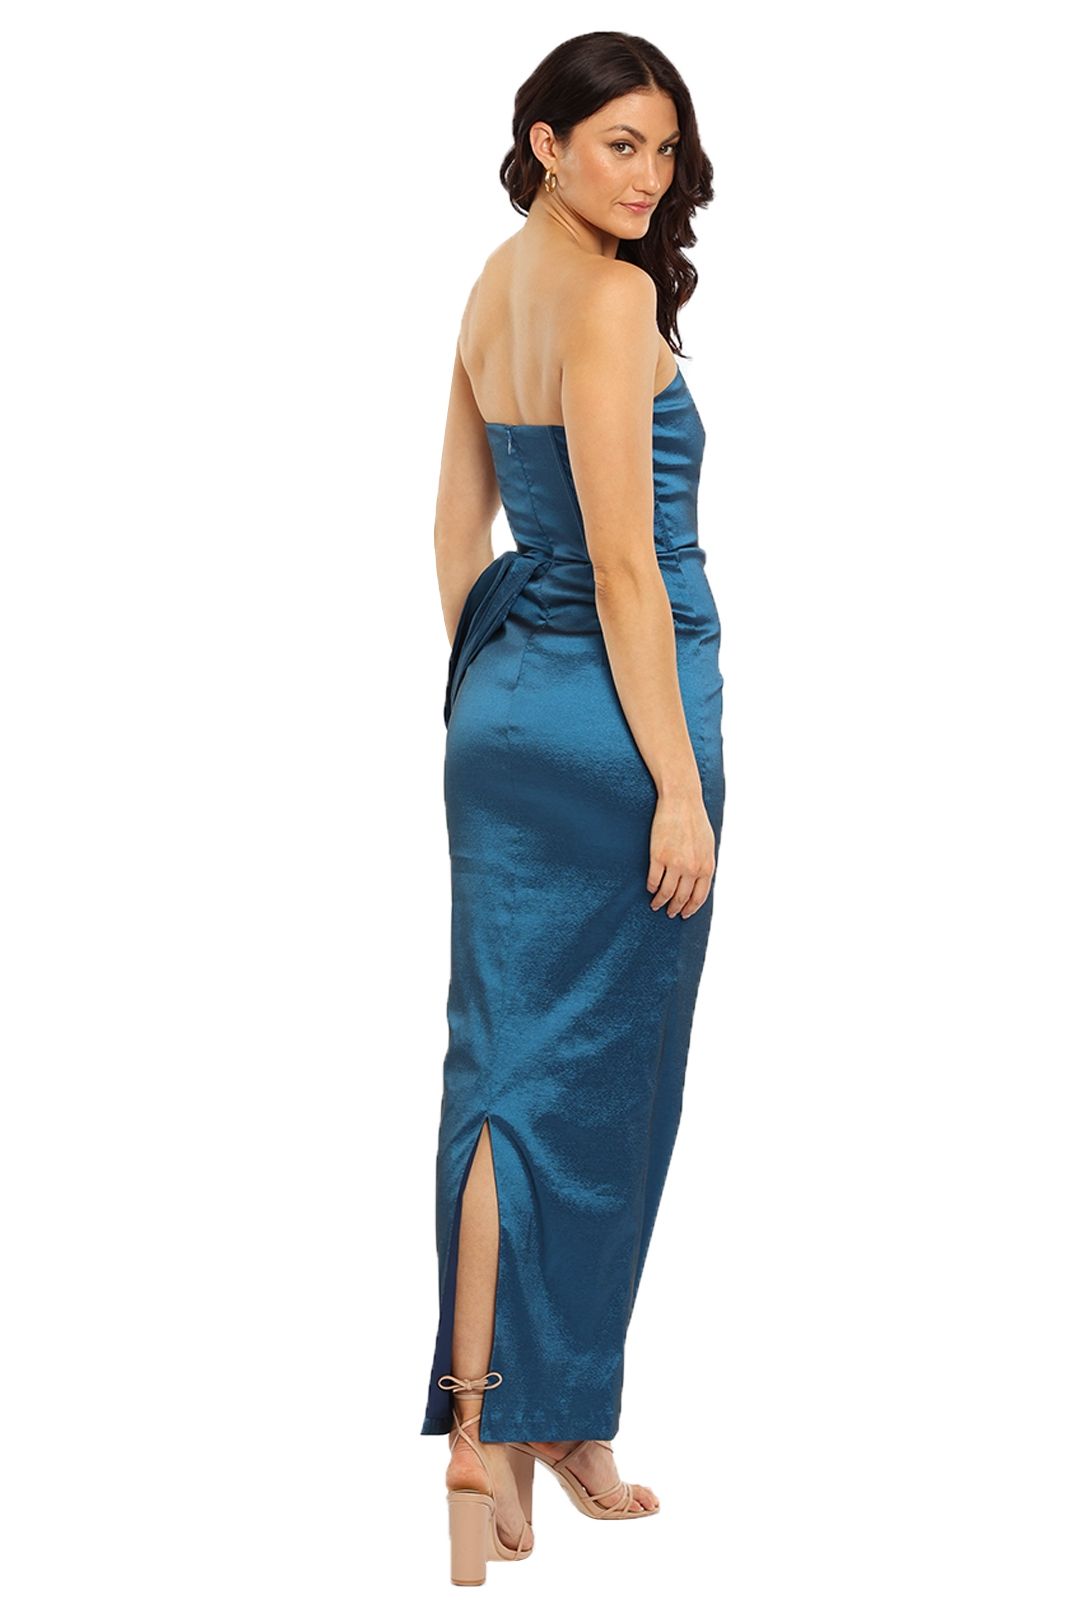 Elle Zeitoune Satin One Shoulder Dress Blue Strapless